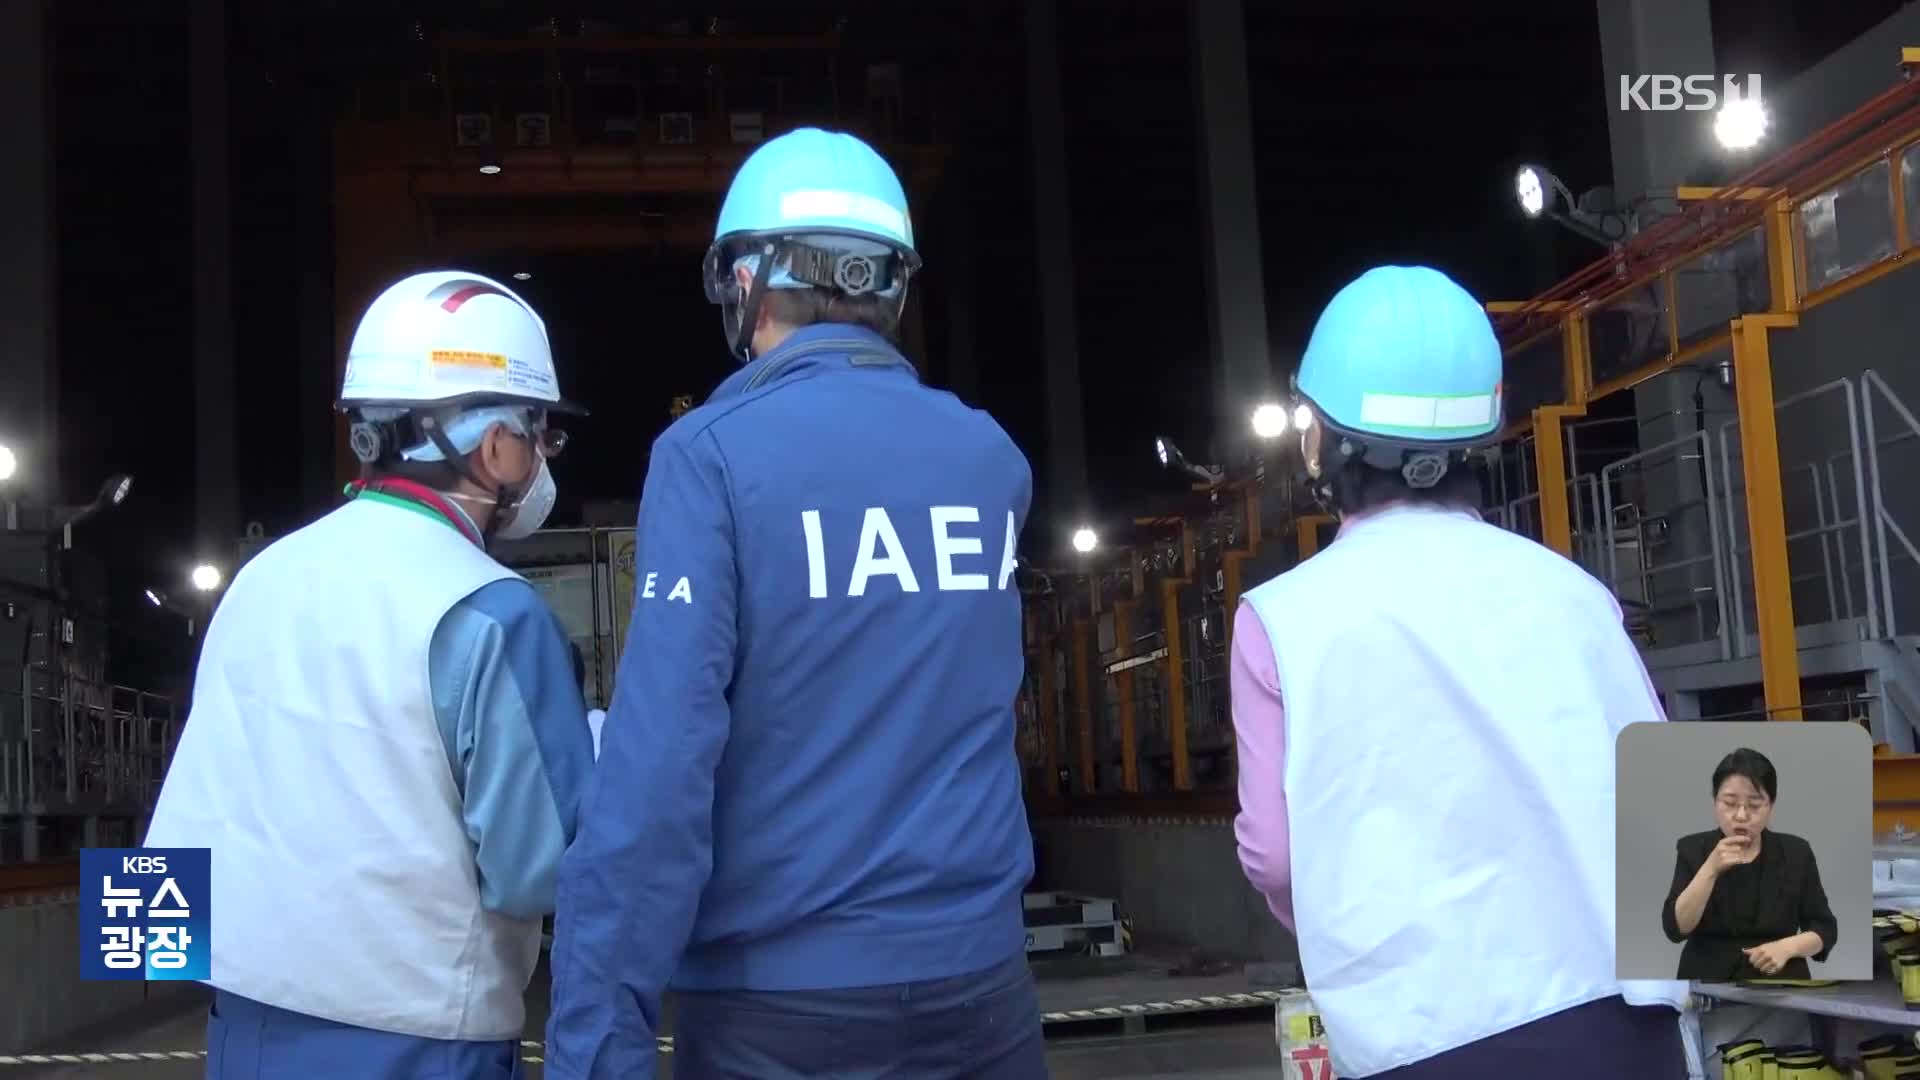 IAEA “일본 오염수 샘플서 유의미한 추가 핵종 미검출”